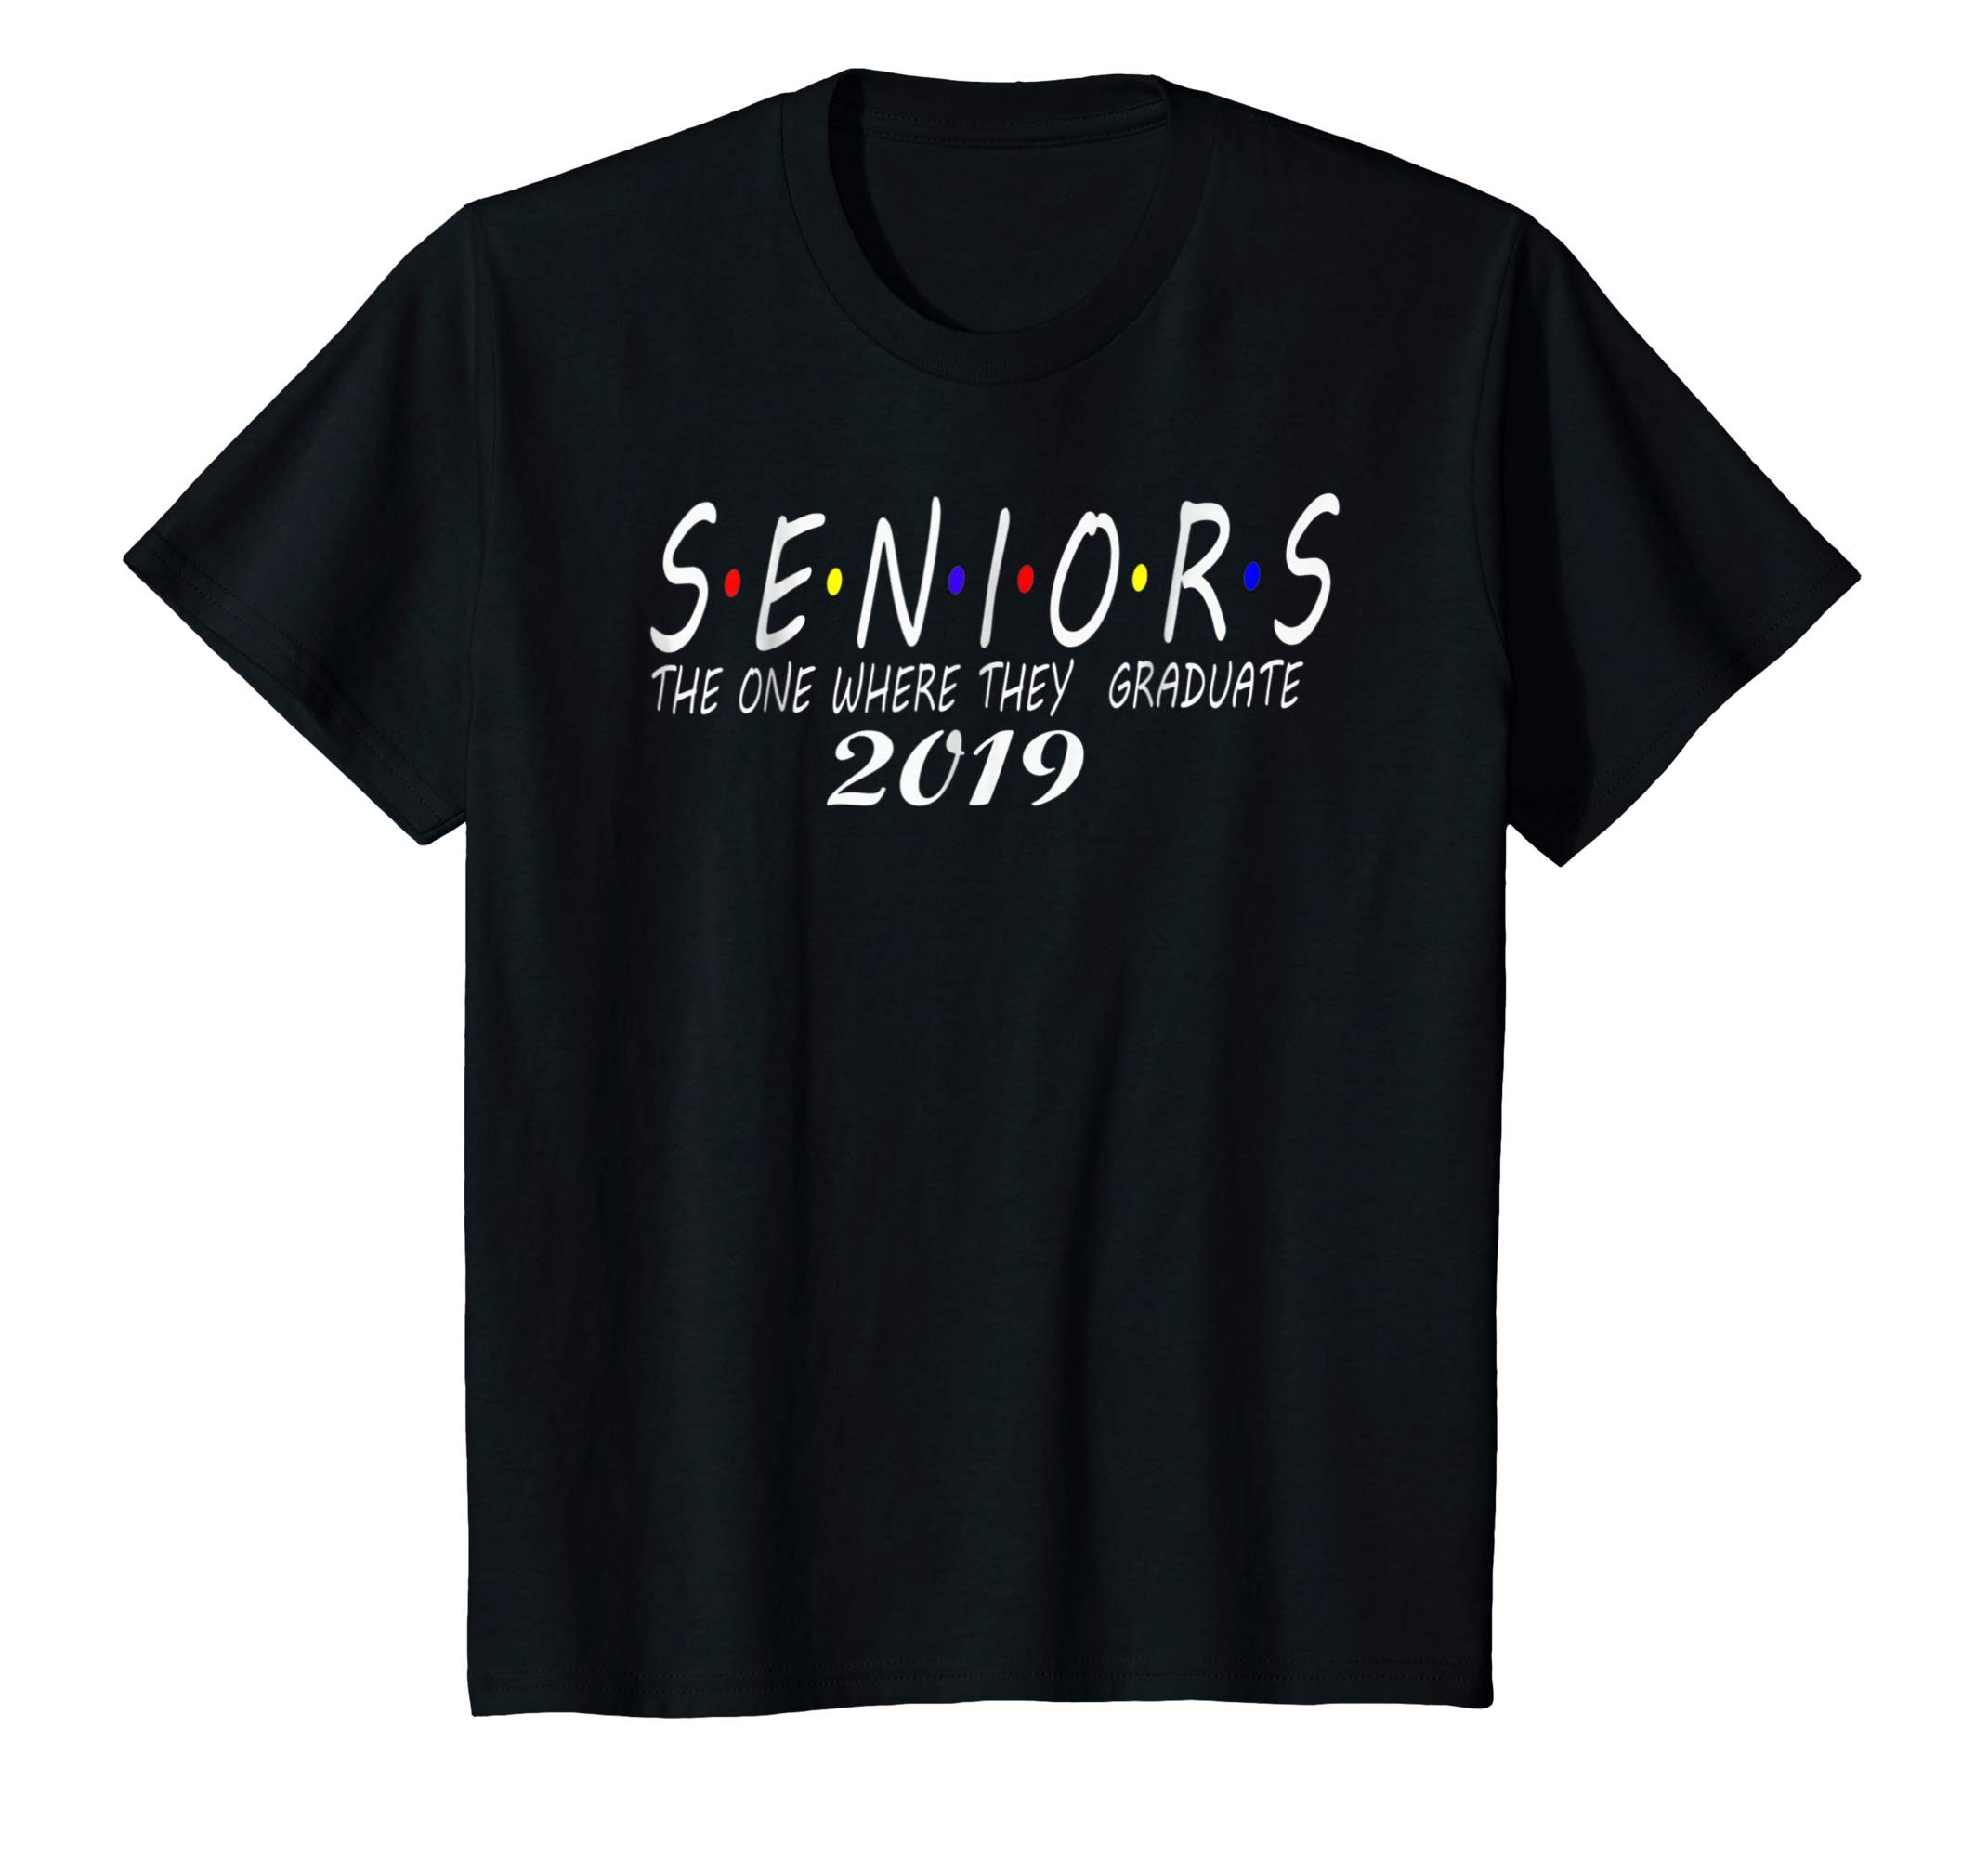 The One Where They Graduate Seniors 2019 TShirt